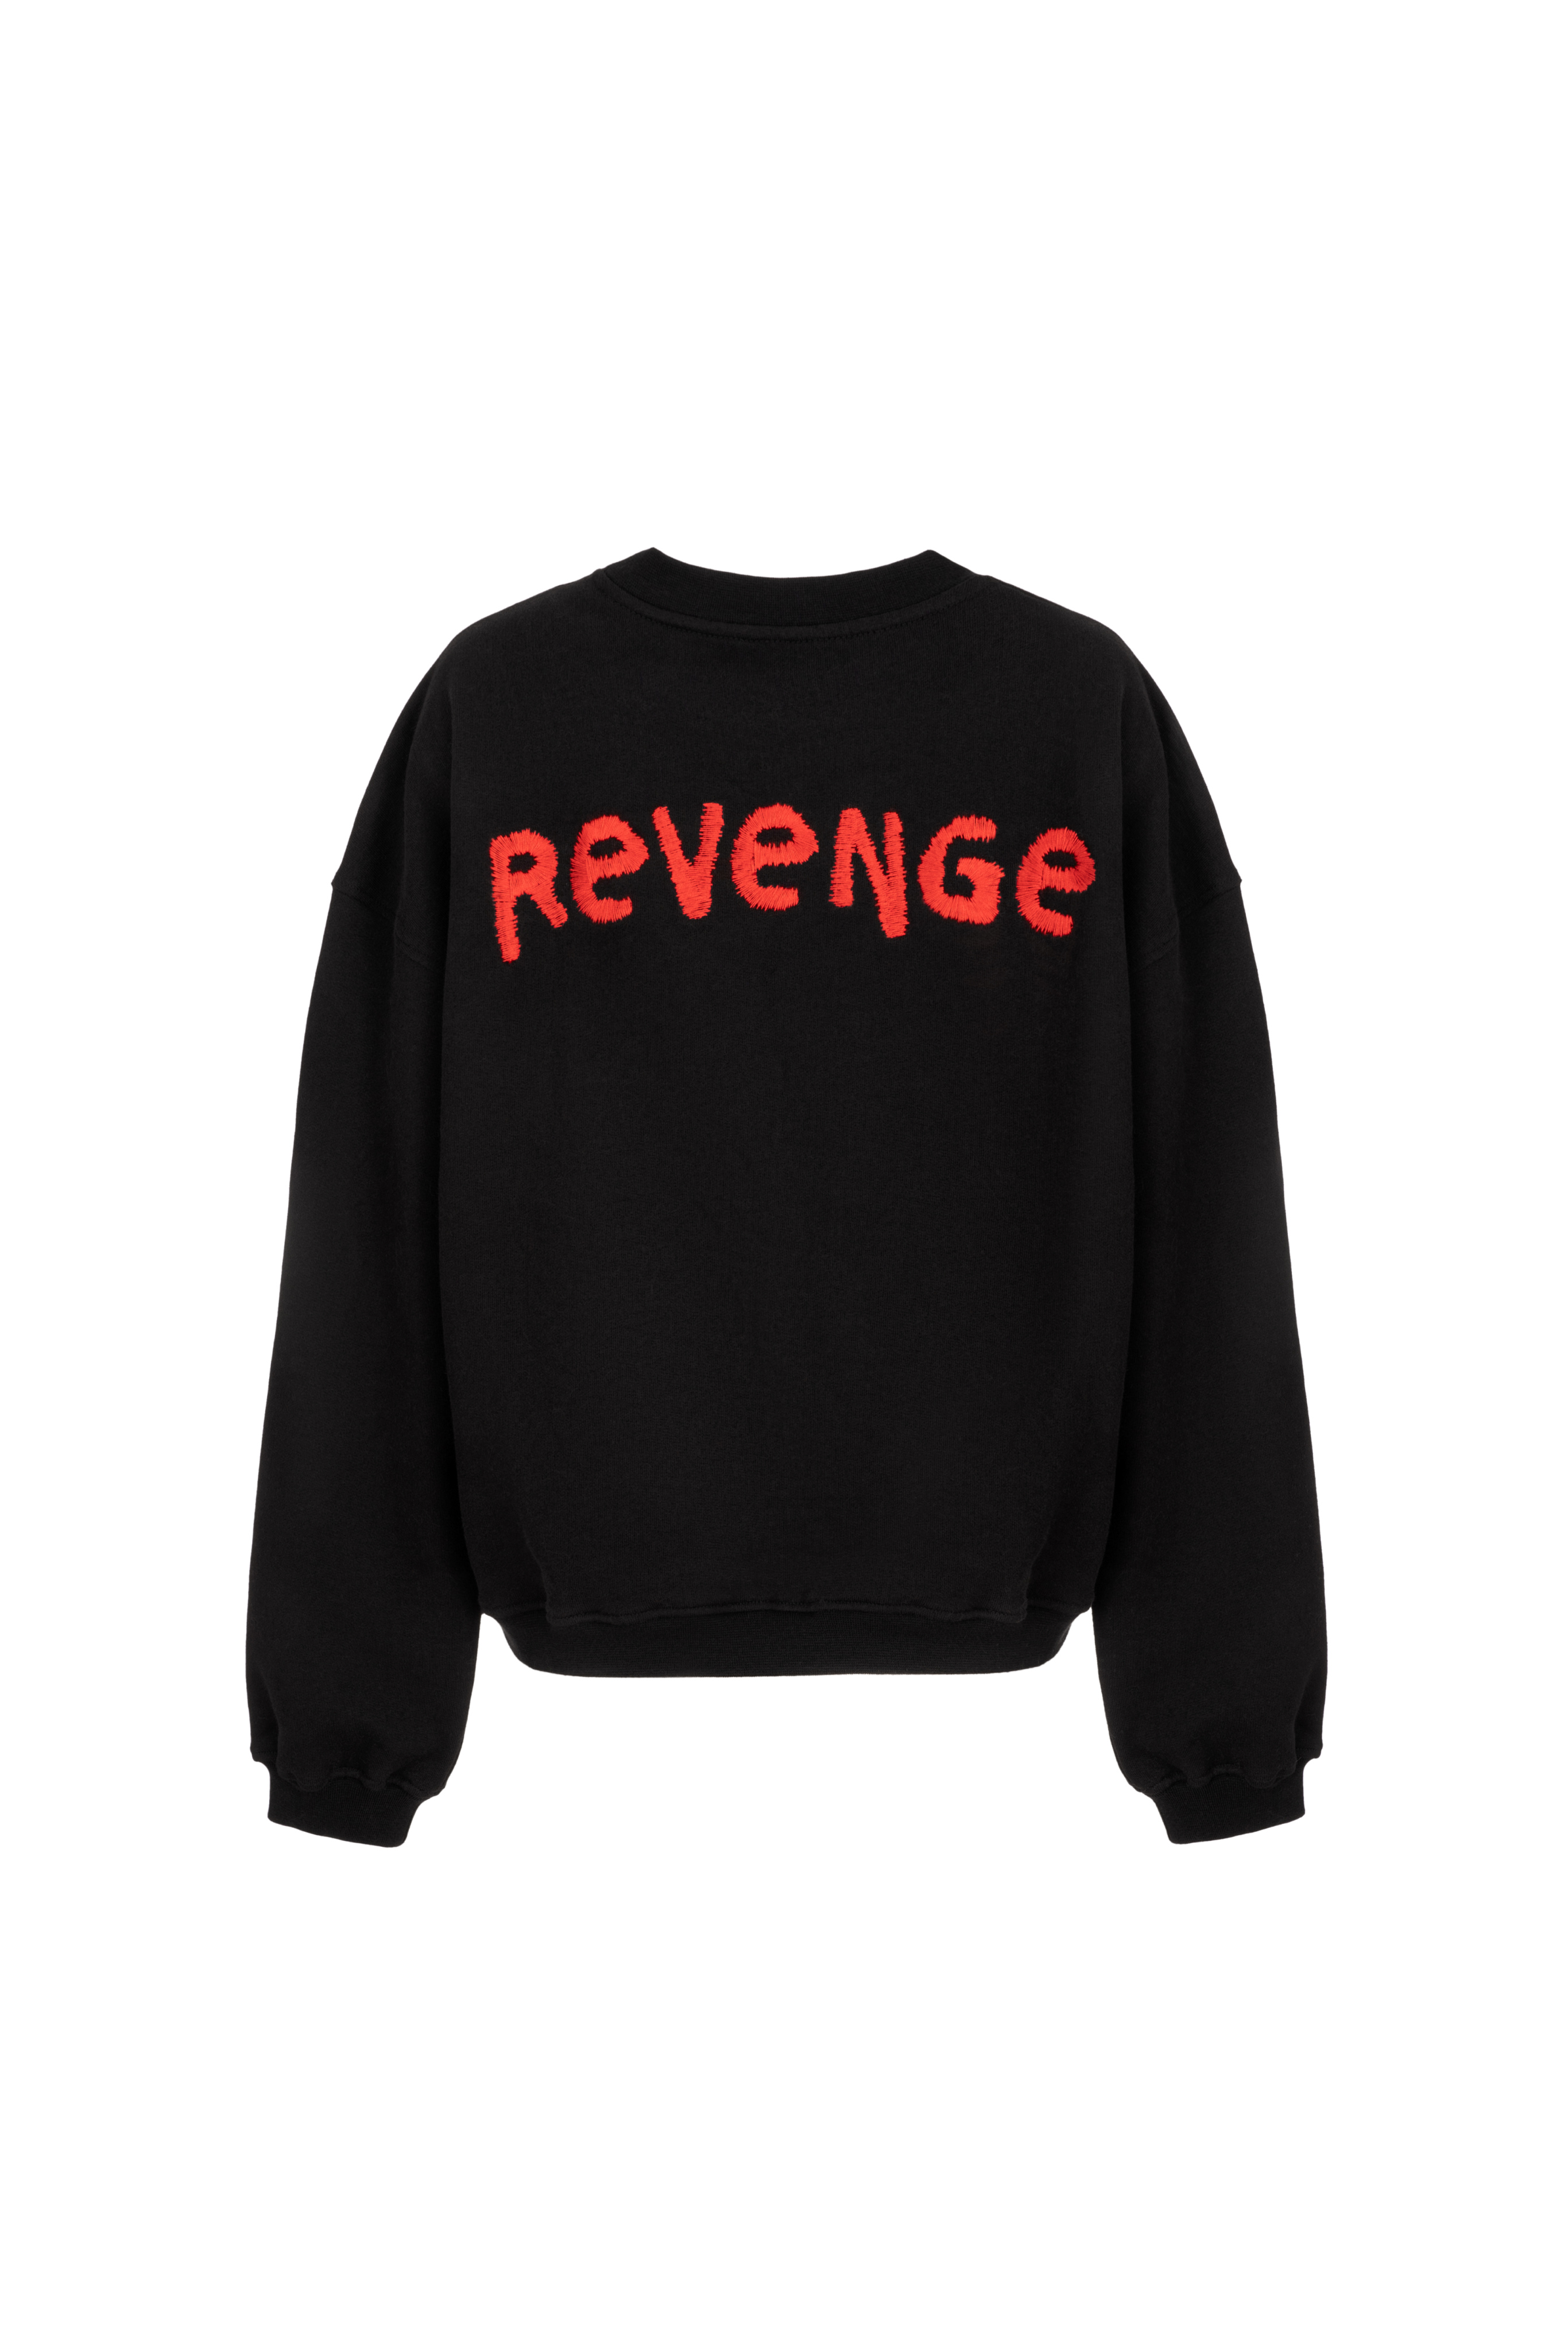 revenge sweatshirt in black